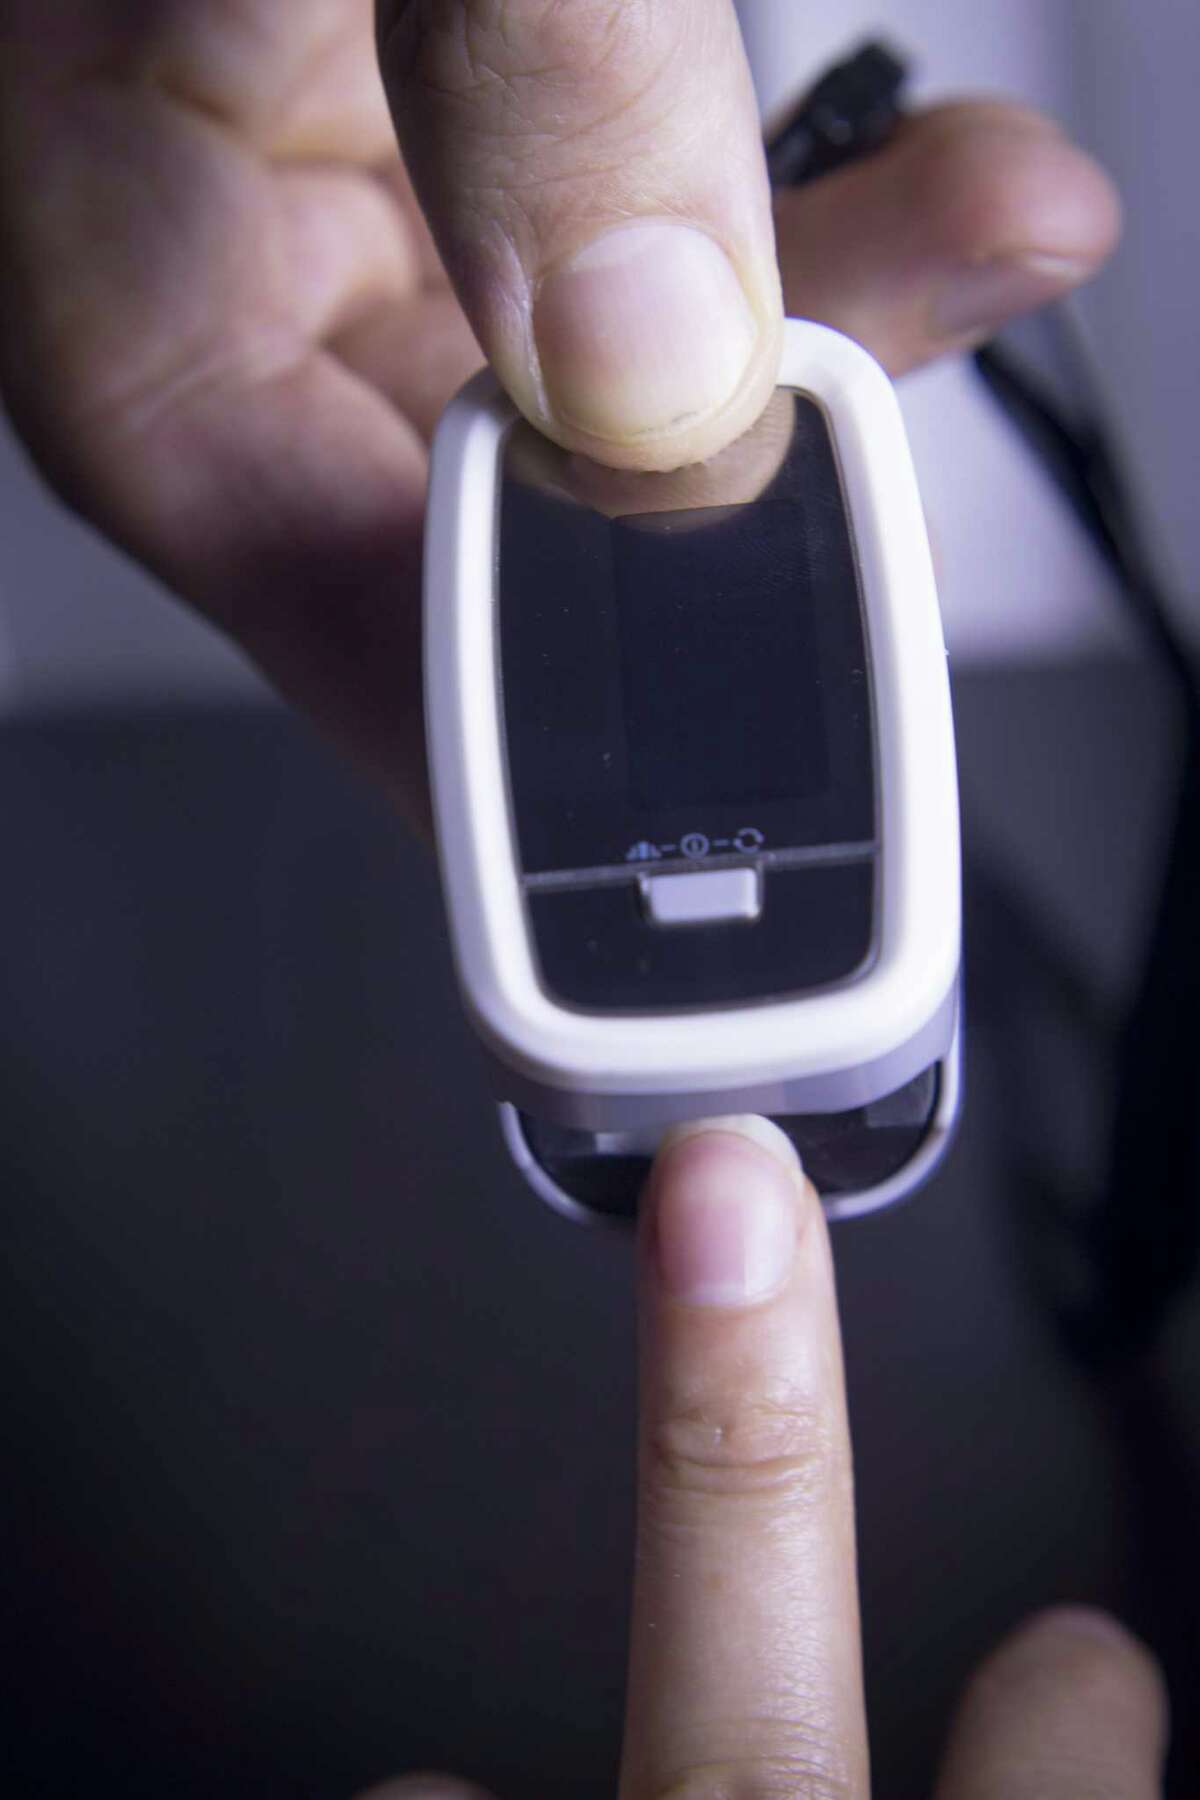 Meter on the finger of blood oxygen